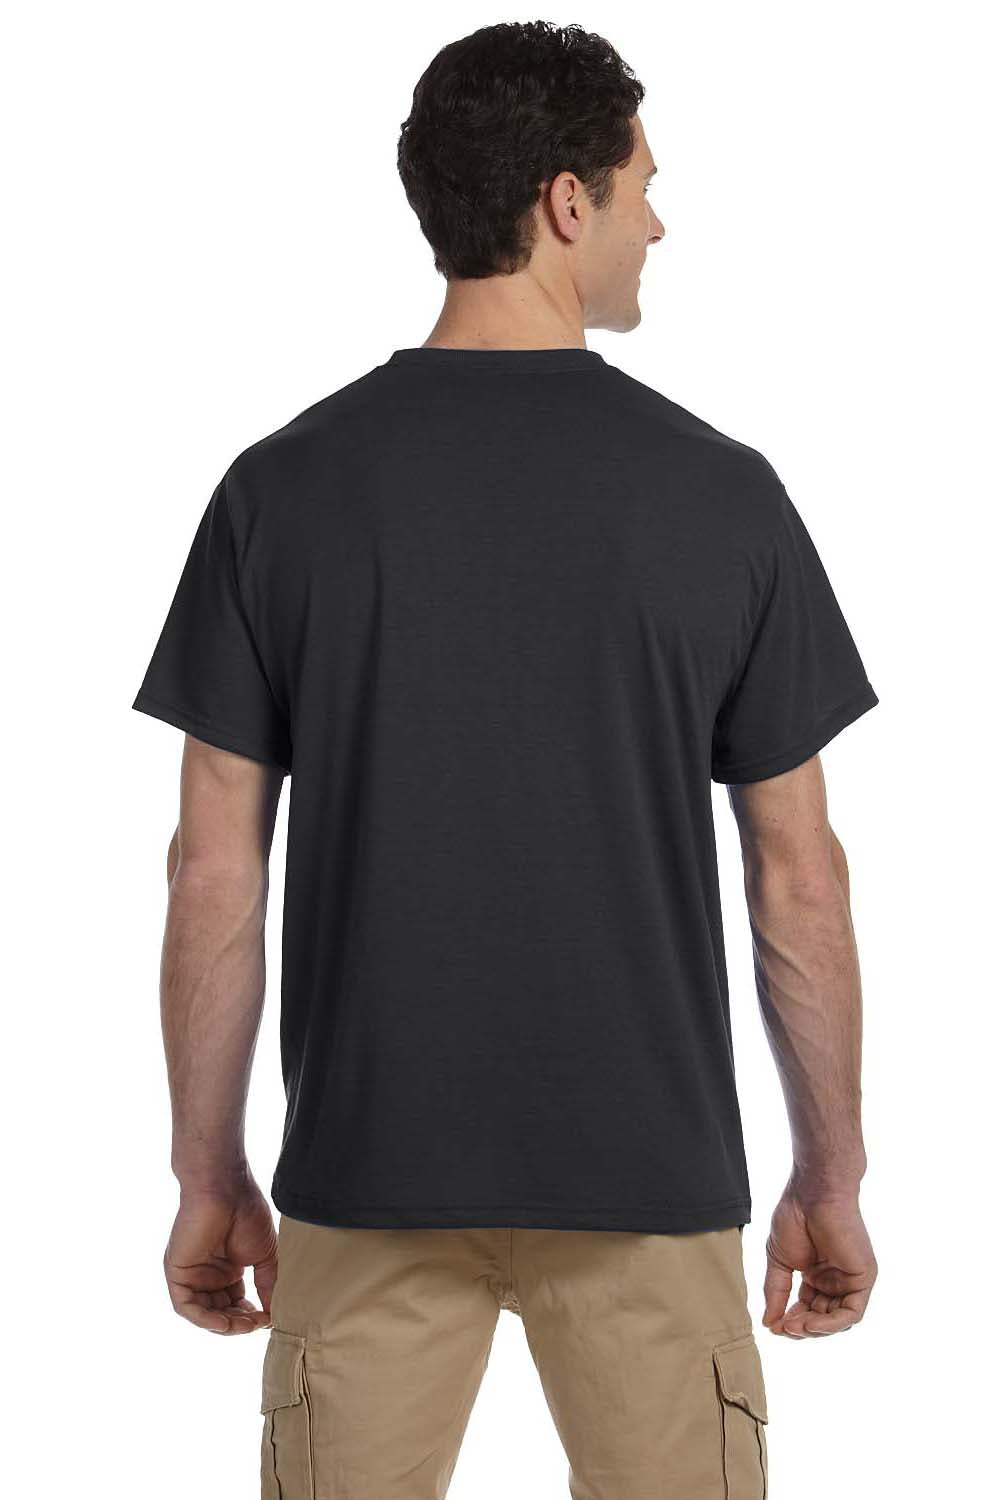 Jerzees 21M Mens Dri-Power Moisture Wicking Short Sleeve Crewneck T-Shirt Charcoal Grey Back